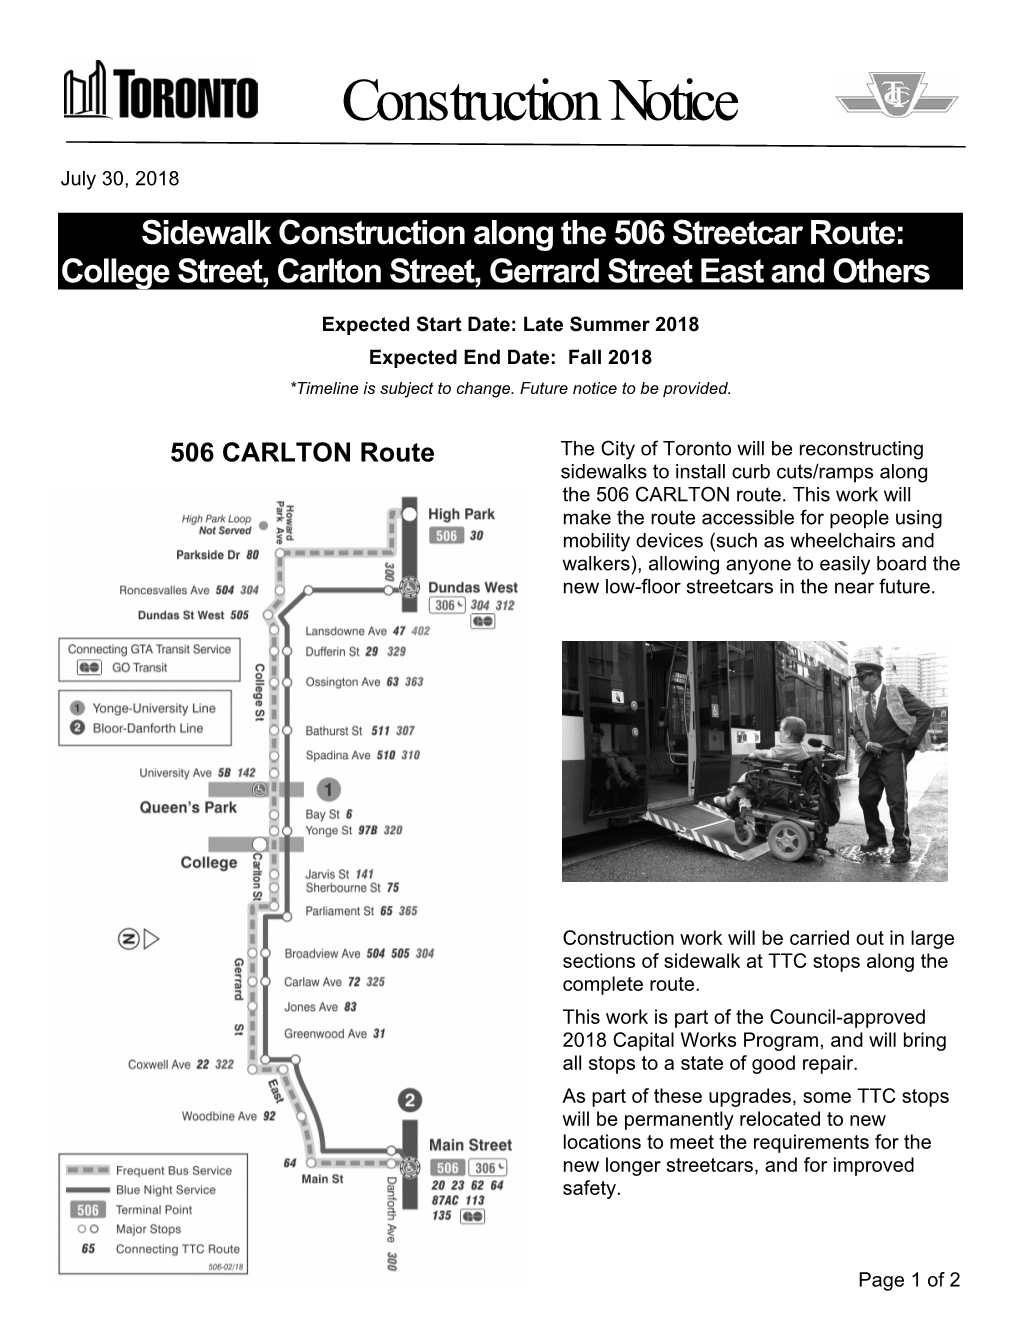 College-Carlton 506 Streetcar Route Construction Notice